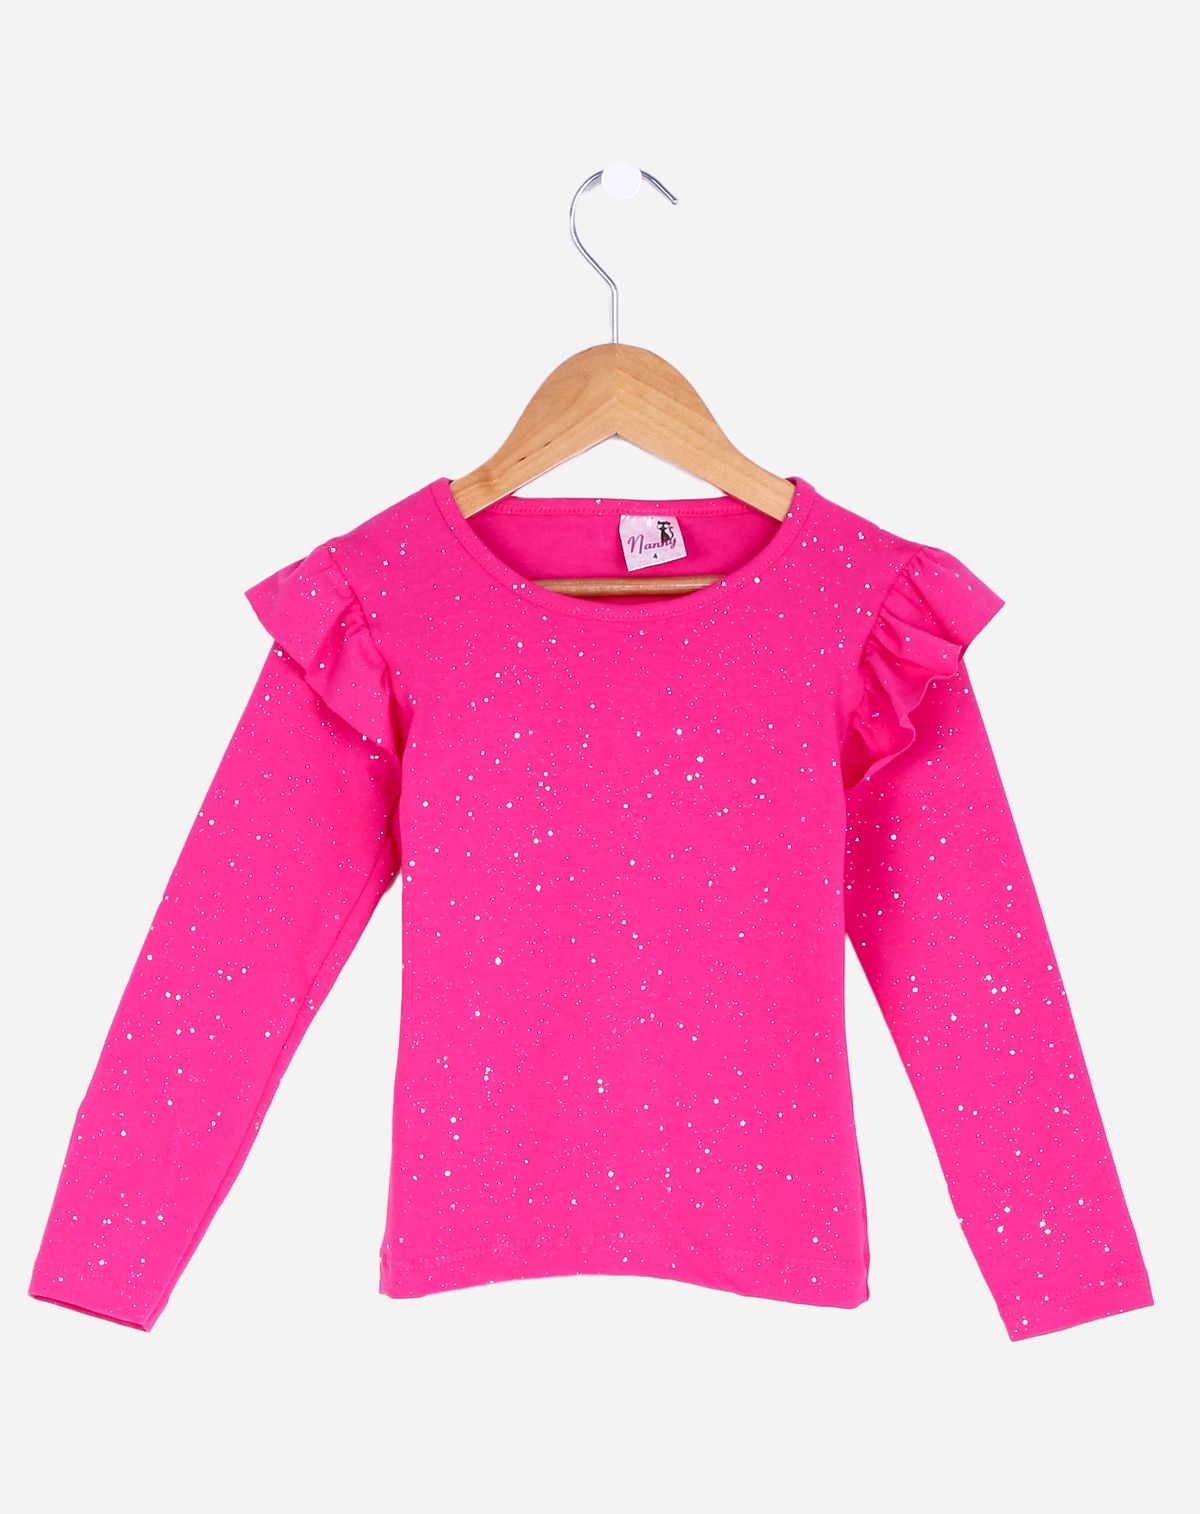 699139001-camiseta-manga-longa-infantil-menina---tam.-4-a-8-anos-pink-4-200